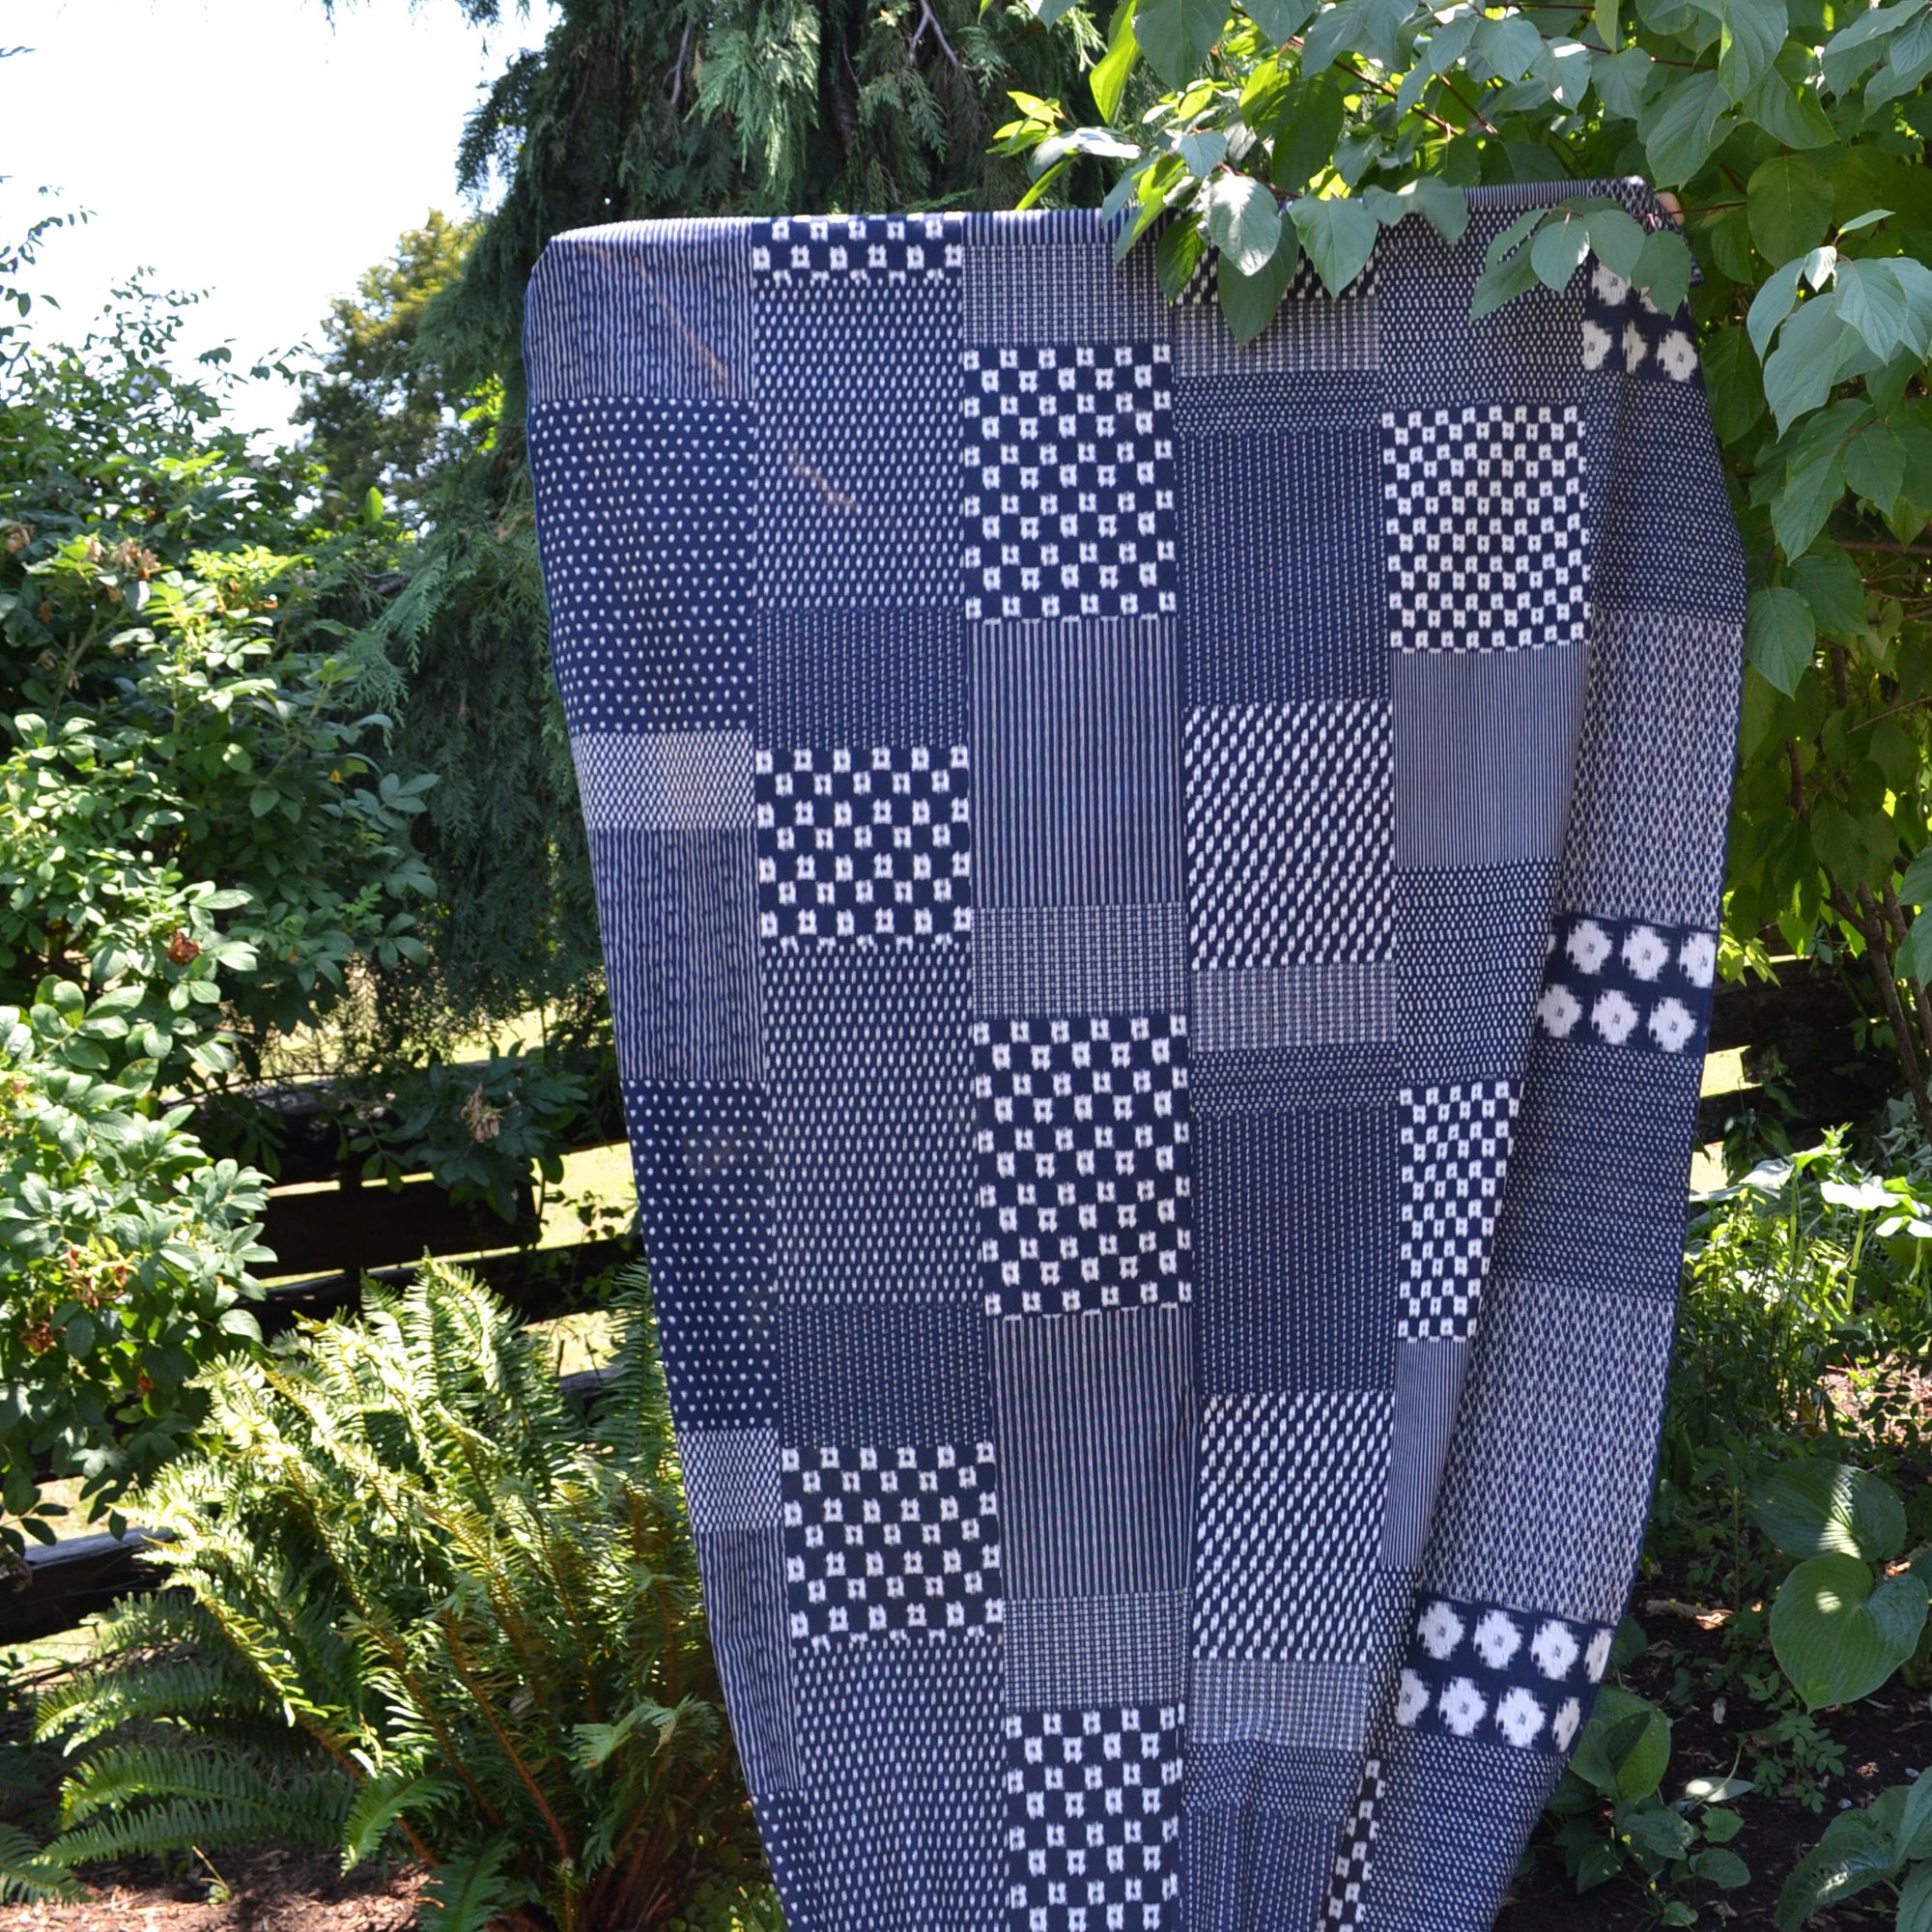 Wagara Japanese sewing fabrics, navy blue